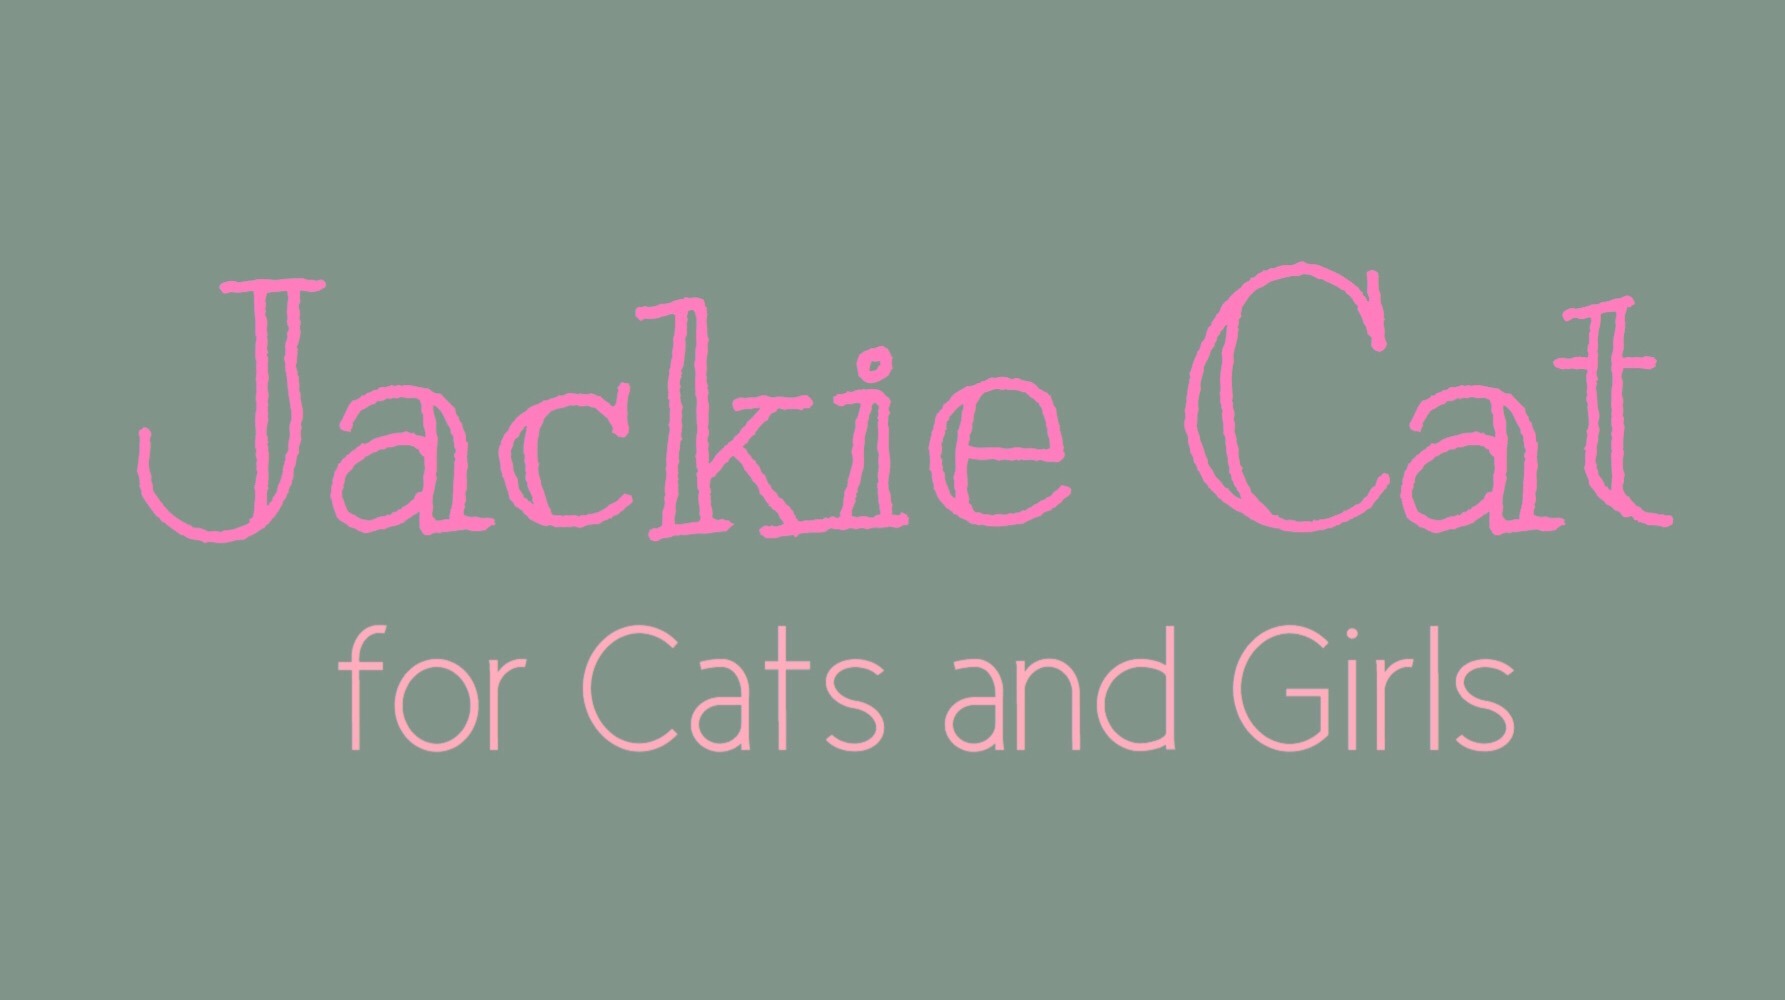 Jackie Cat